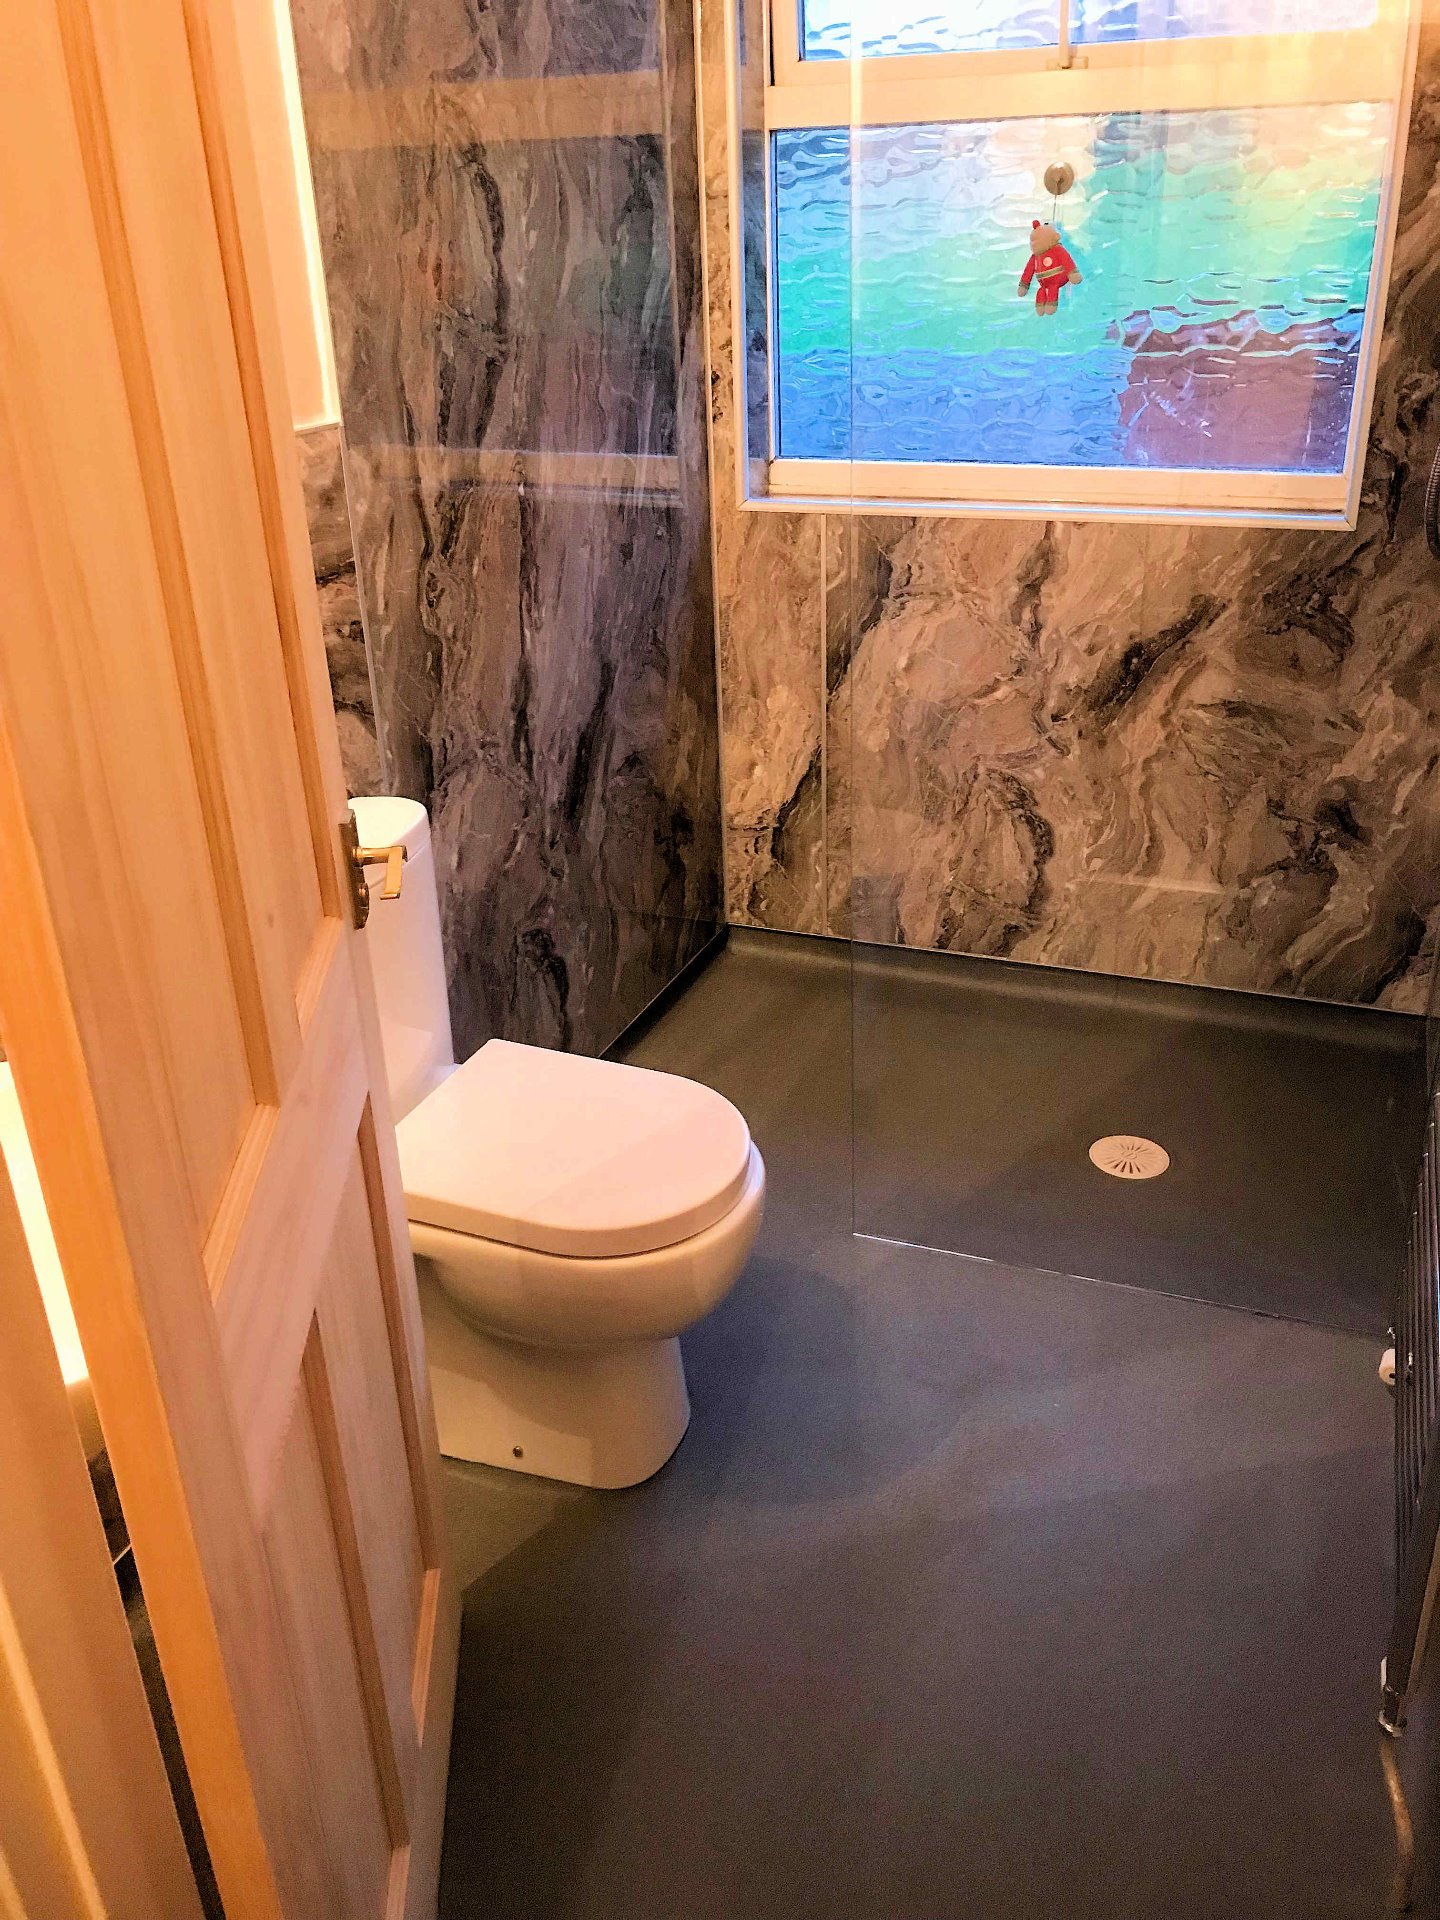 Bathroom to walk in shower room, close coupled toilet. Barnstaple North Devon